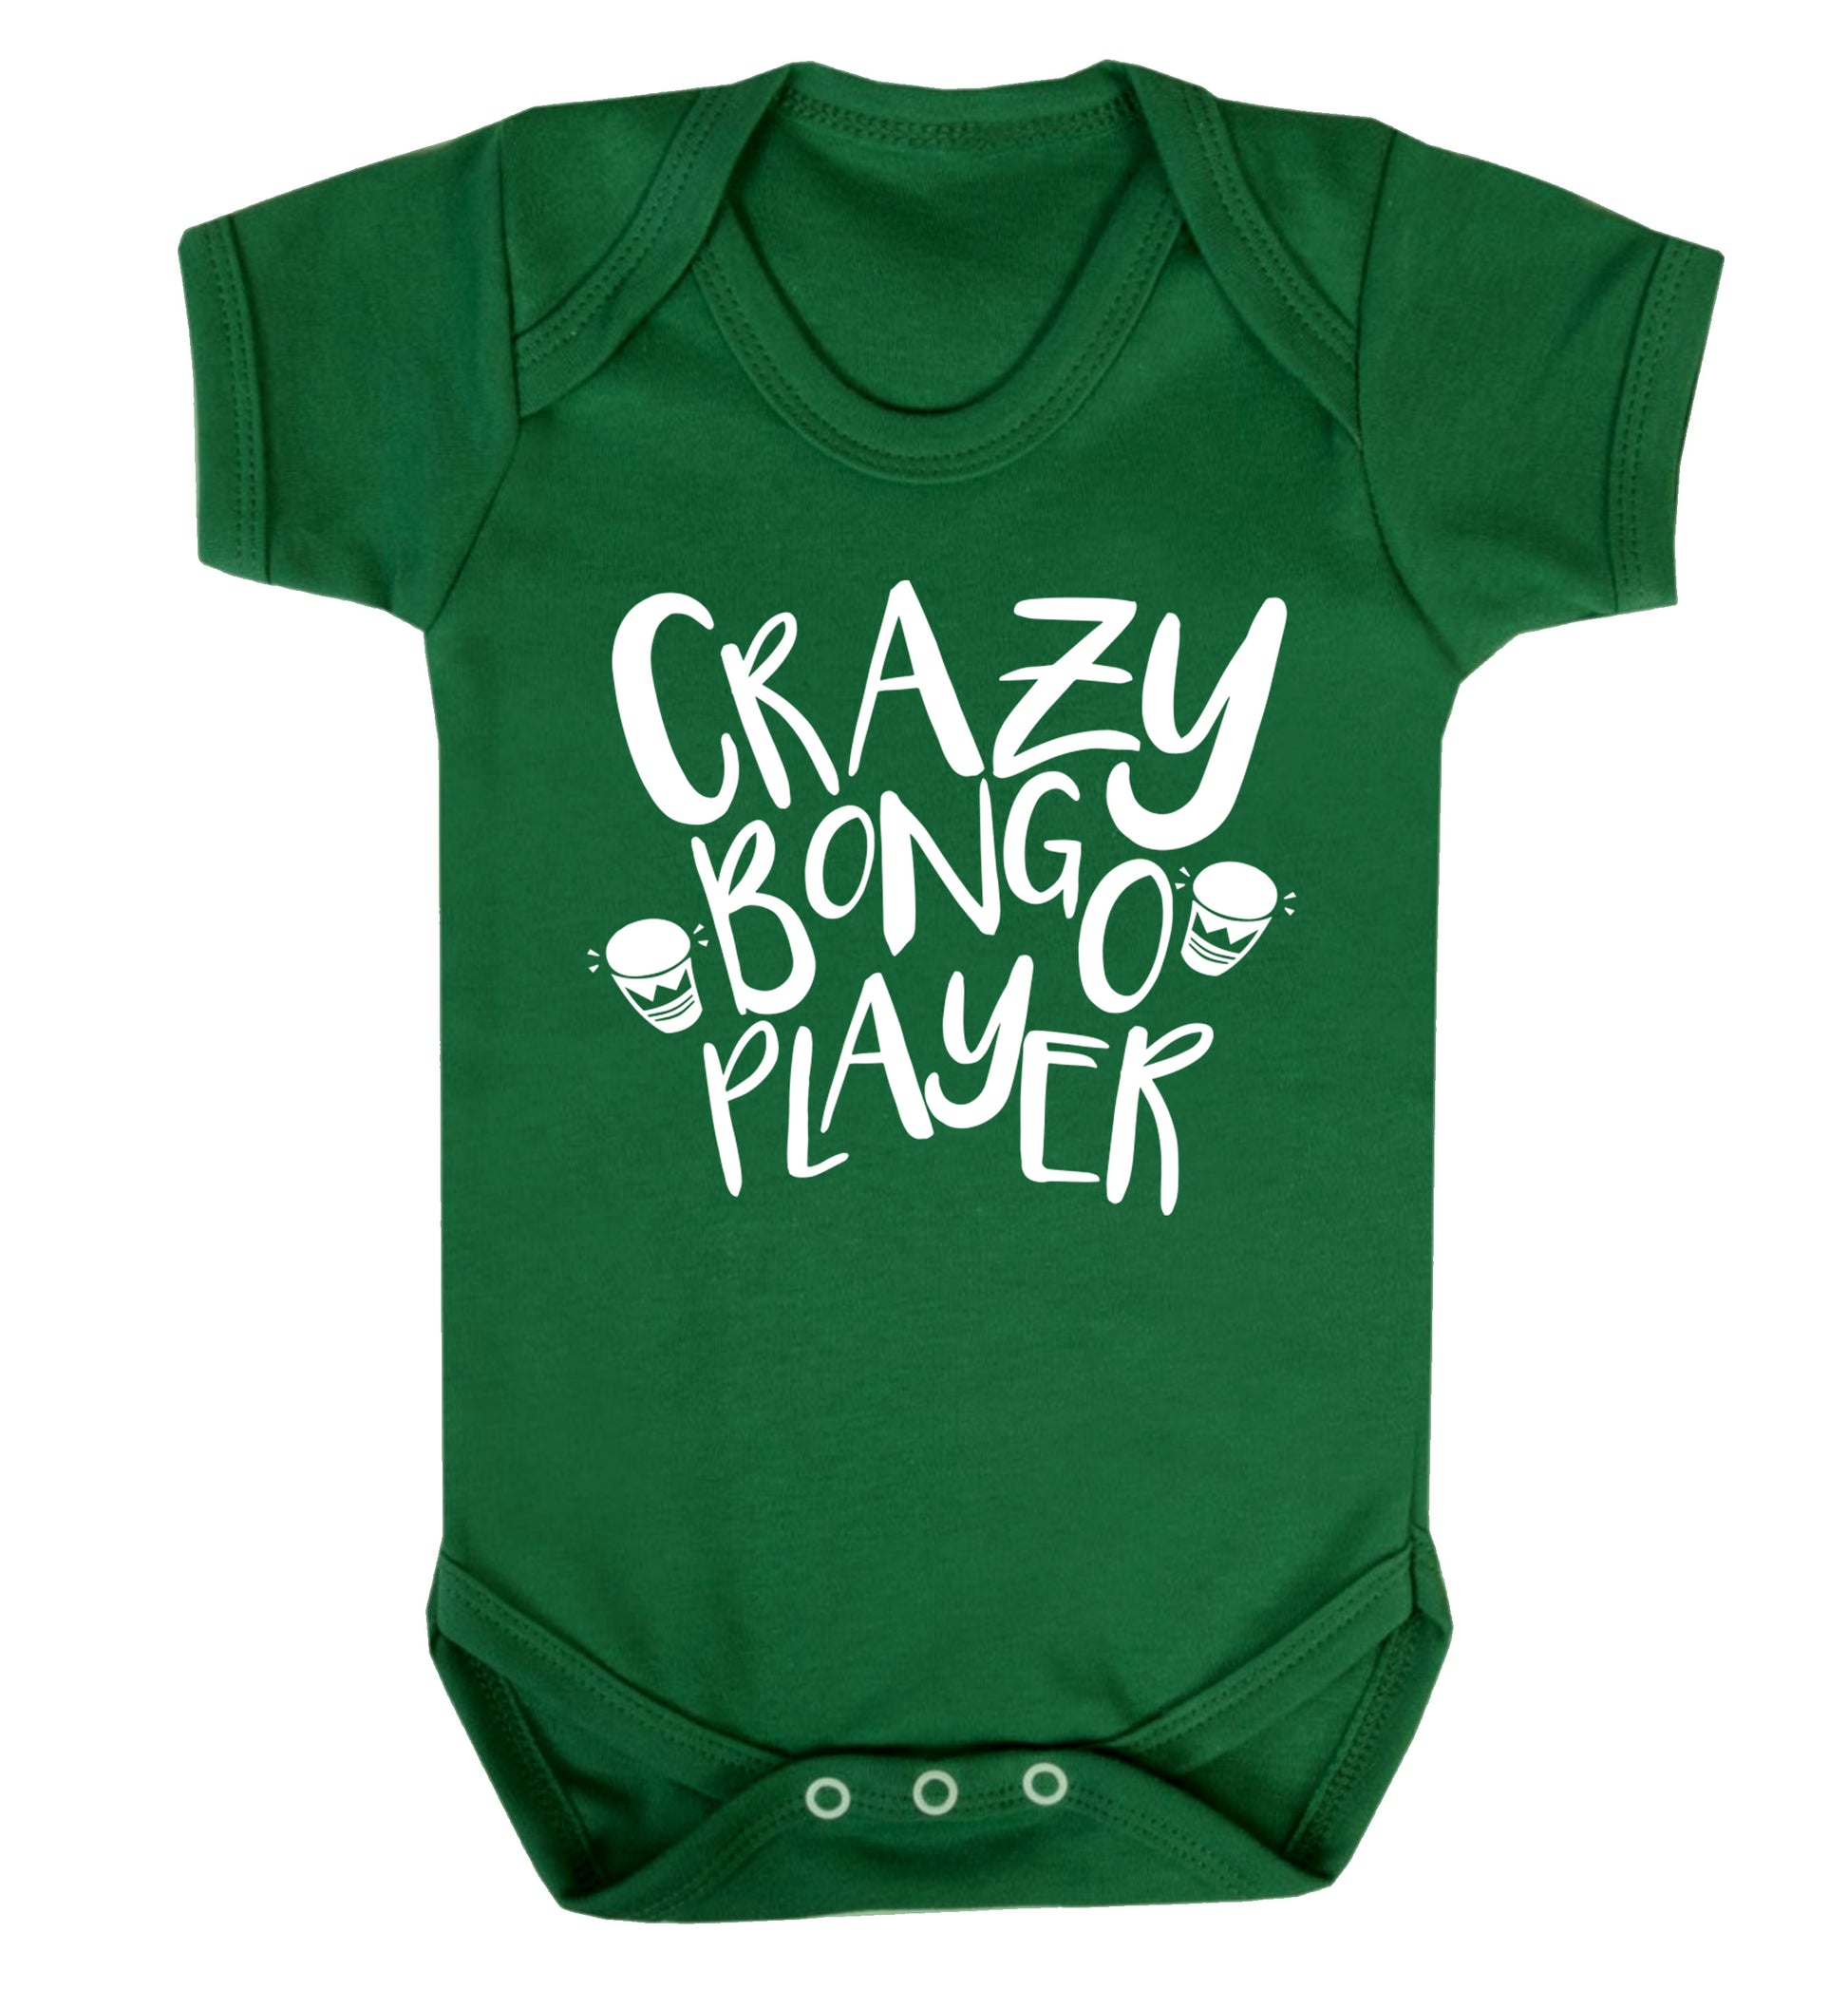 Crazy bongo player Baby Vest green 18-24 months